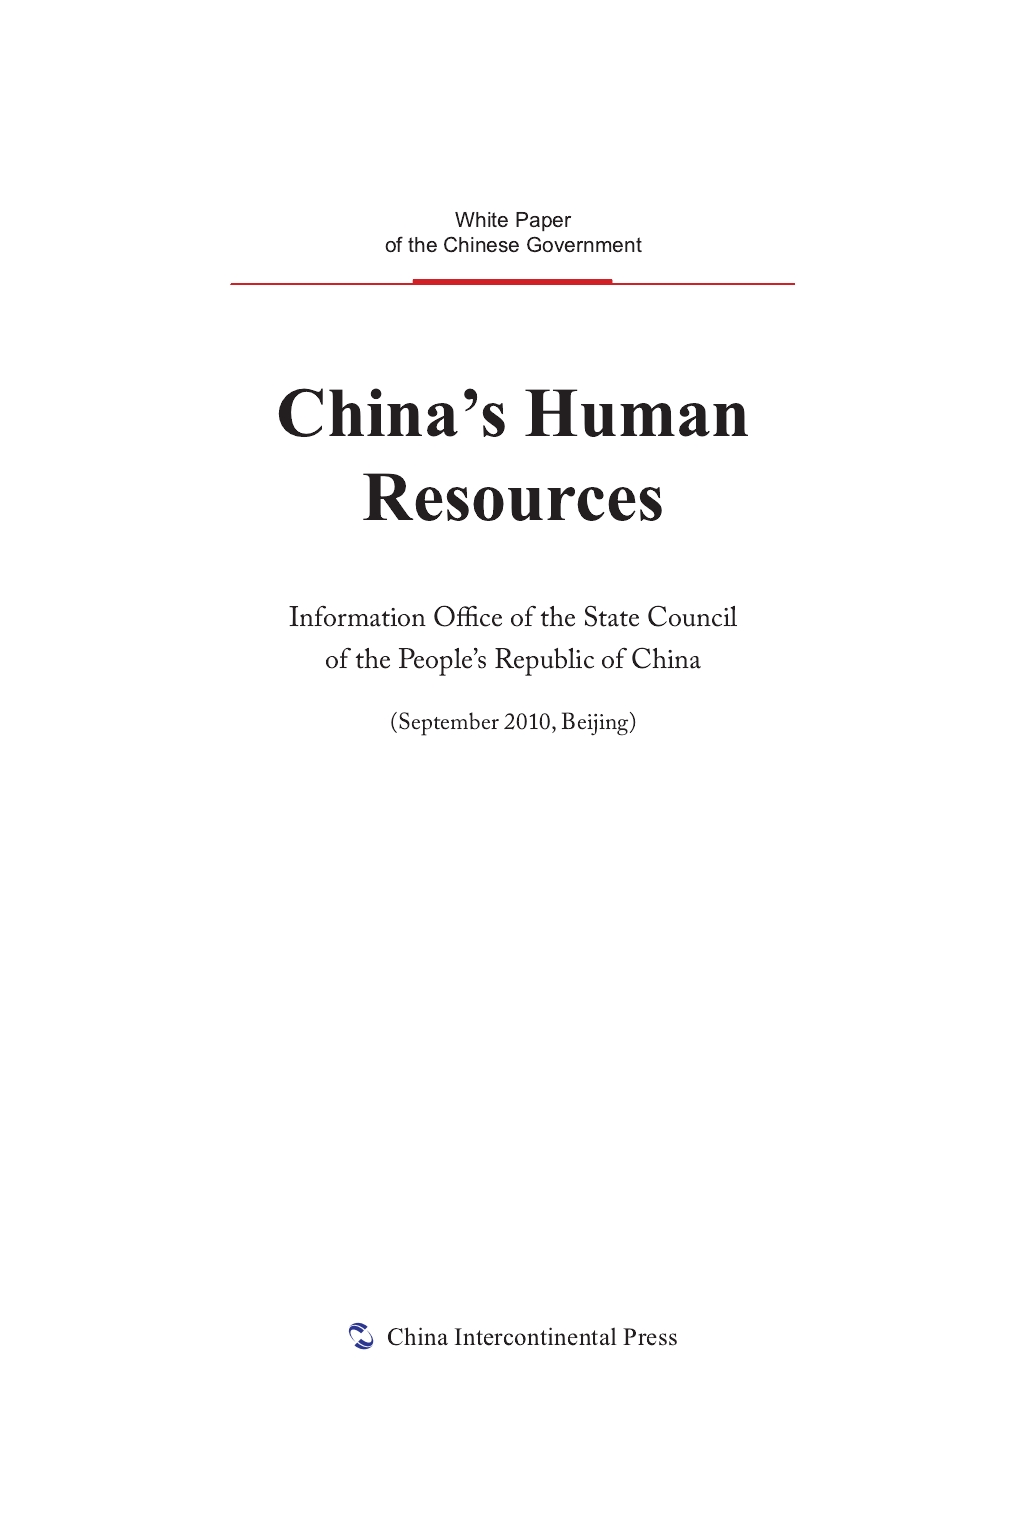 China's Human Resources